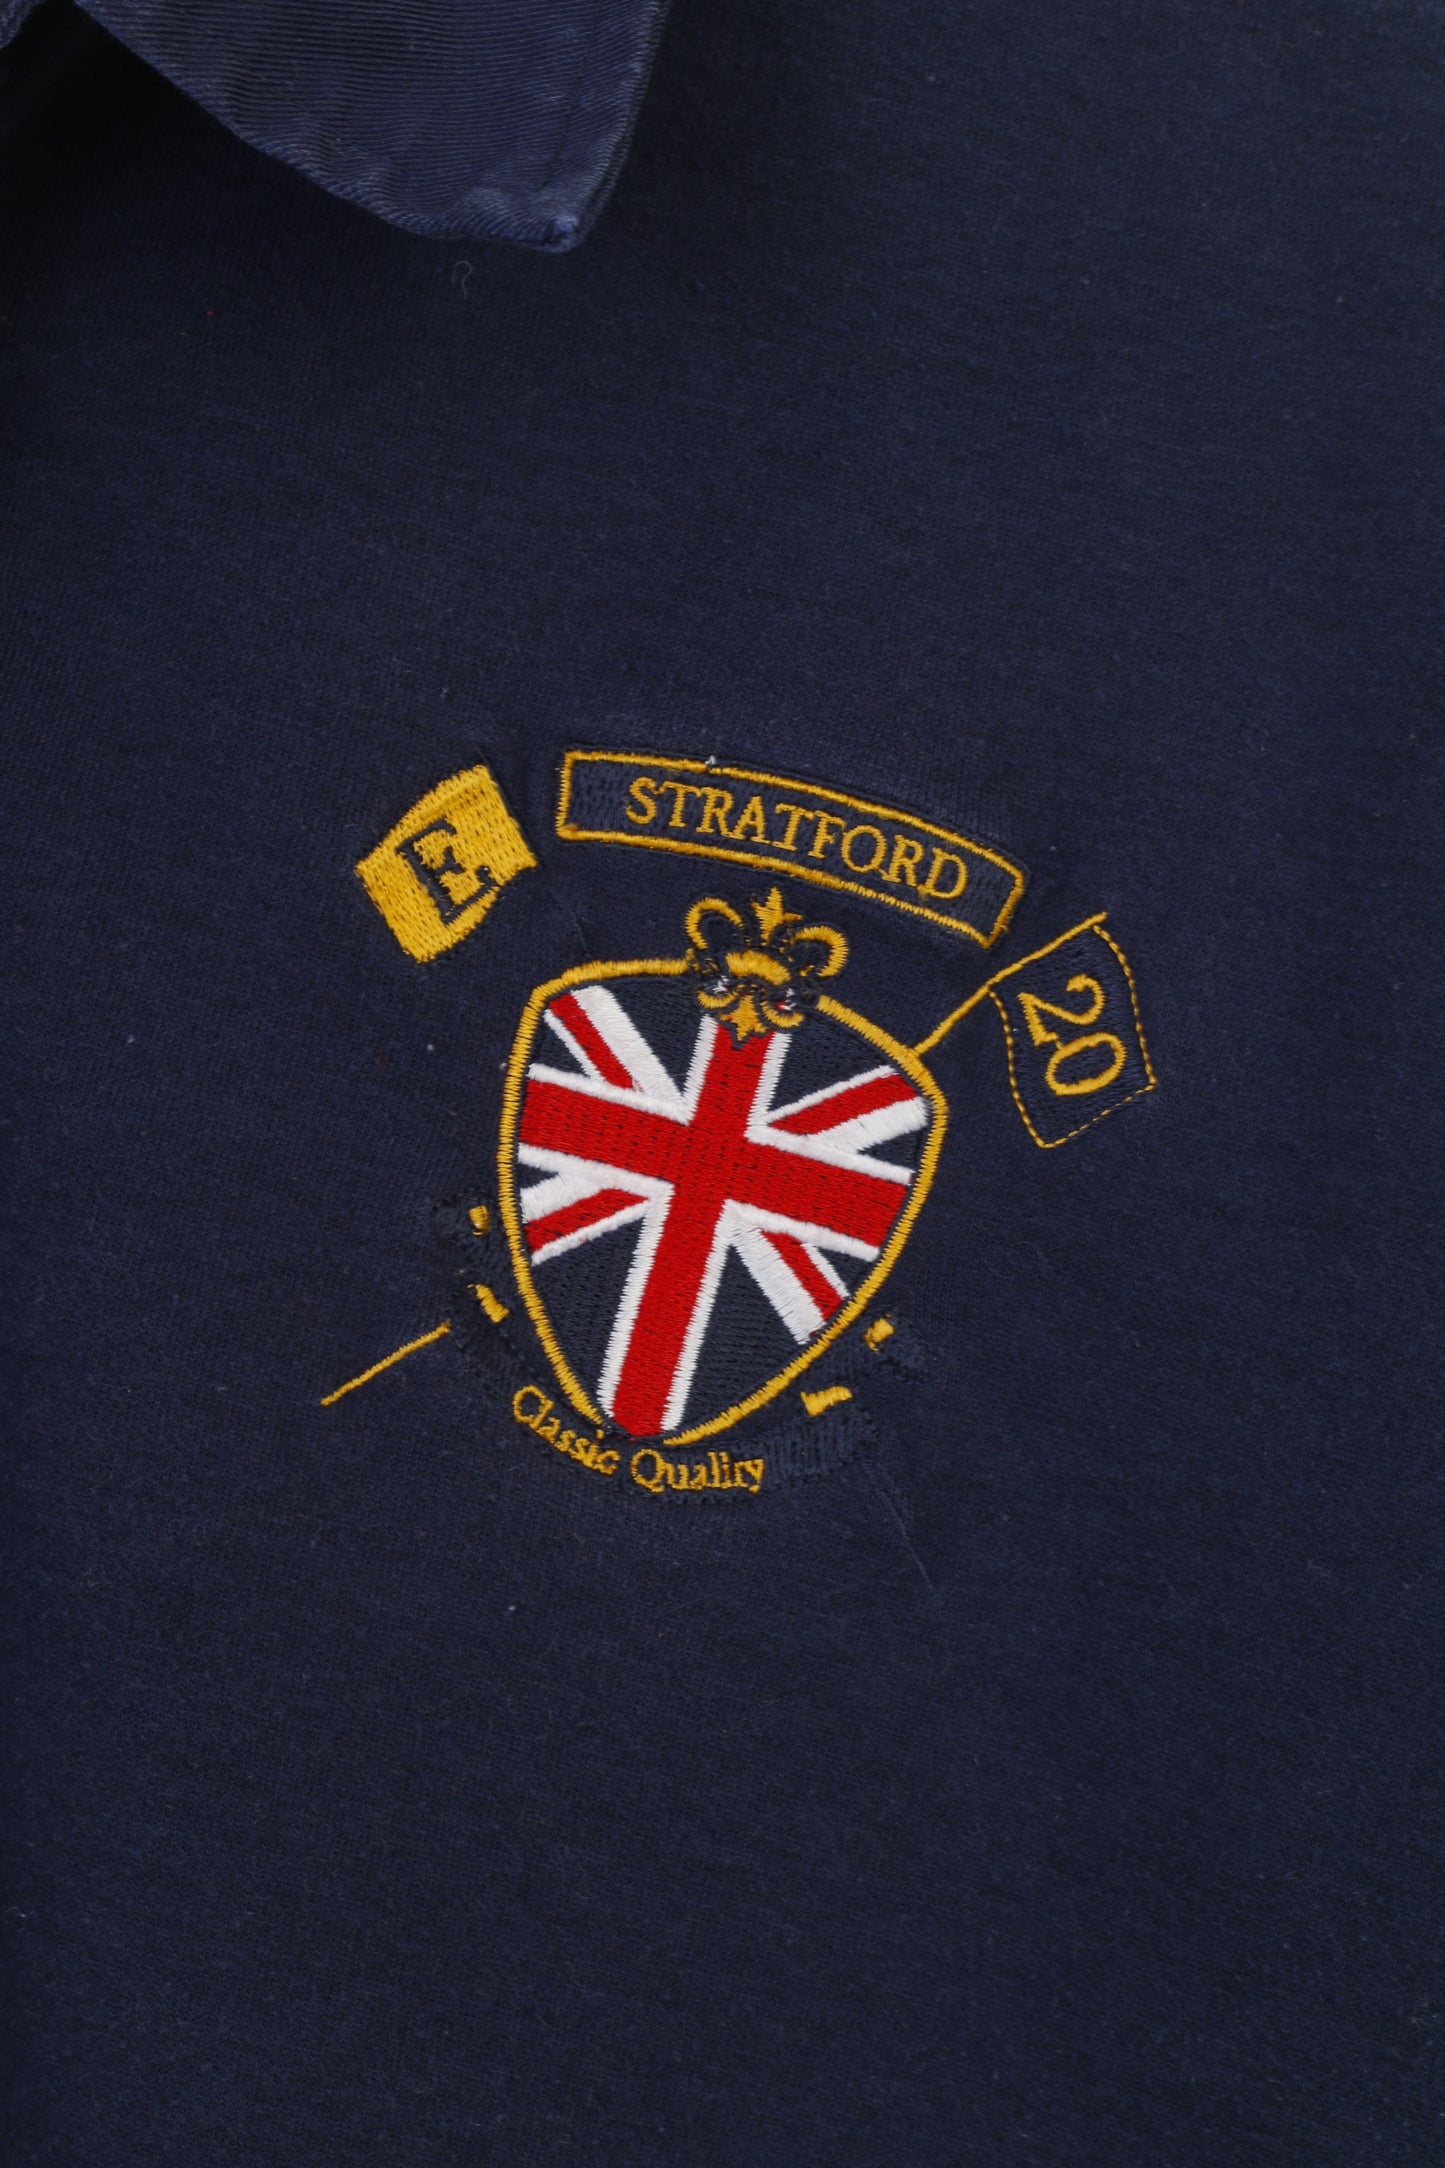 Stratford Men XL Polo Shirt London England Buttons Detailed Short Sleeve Vintage Navy E20 Top